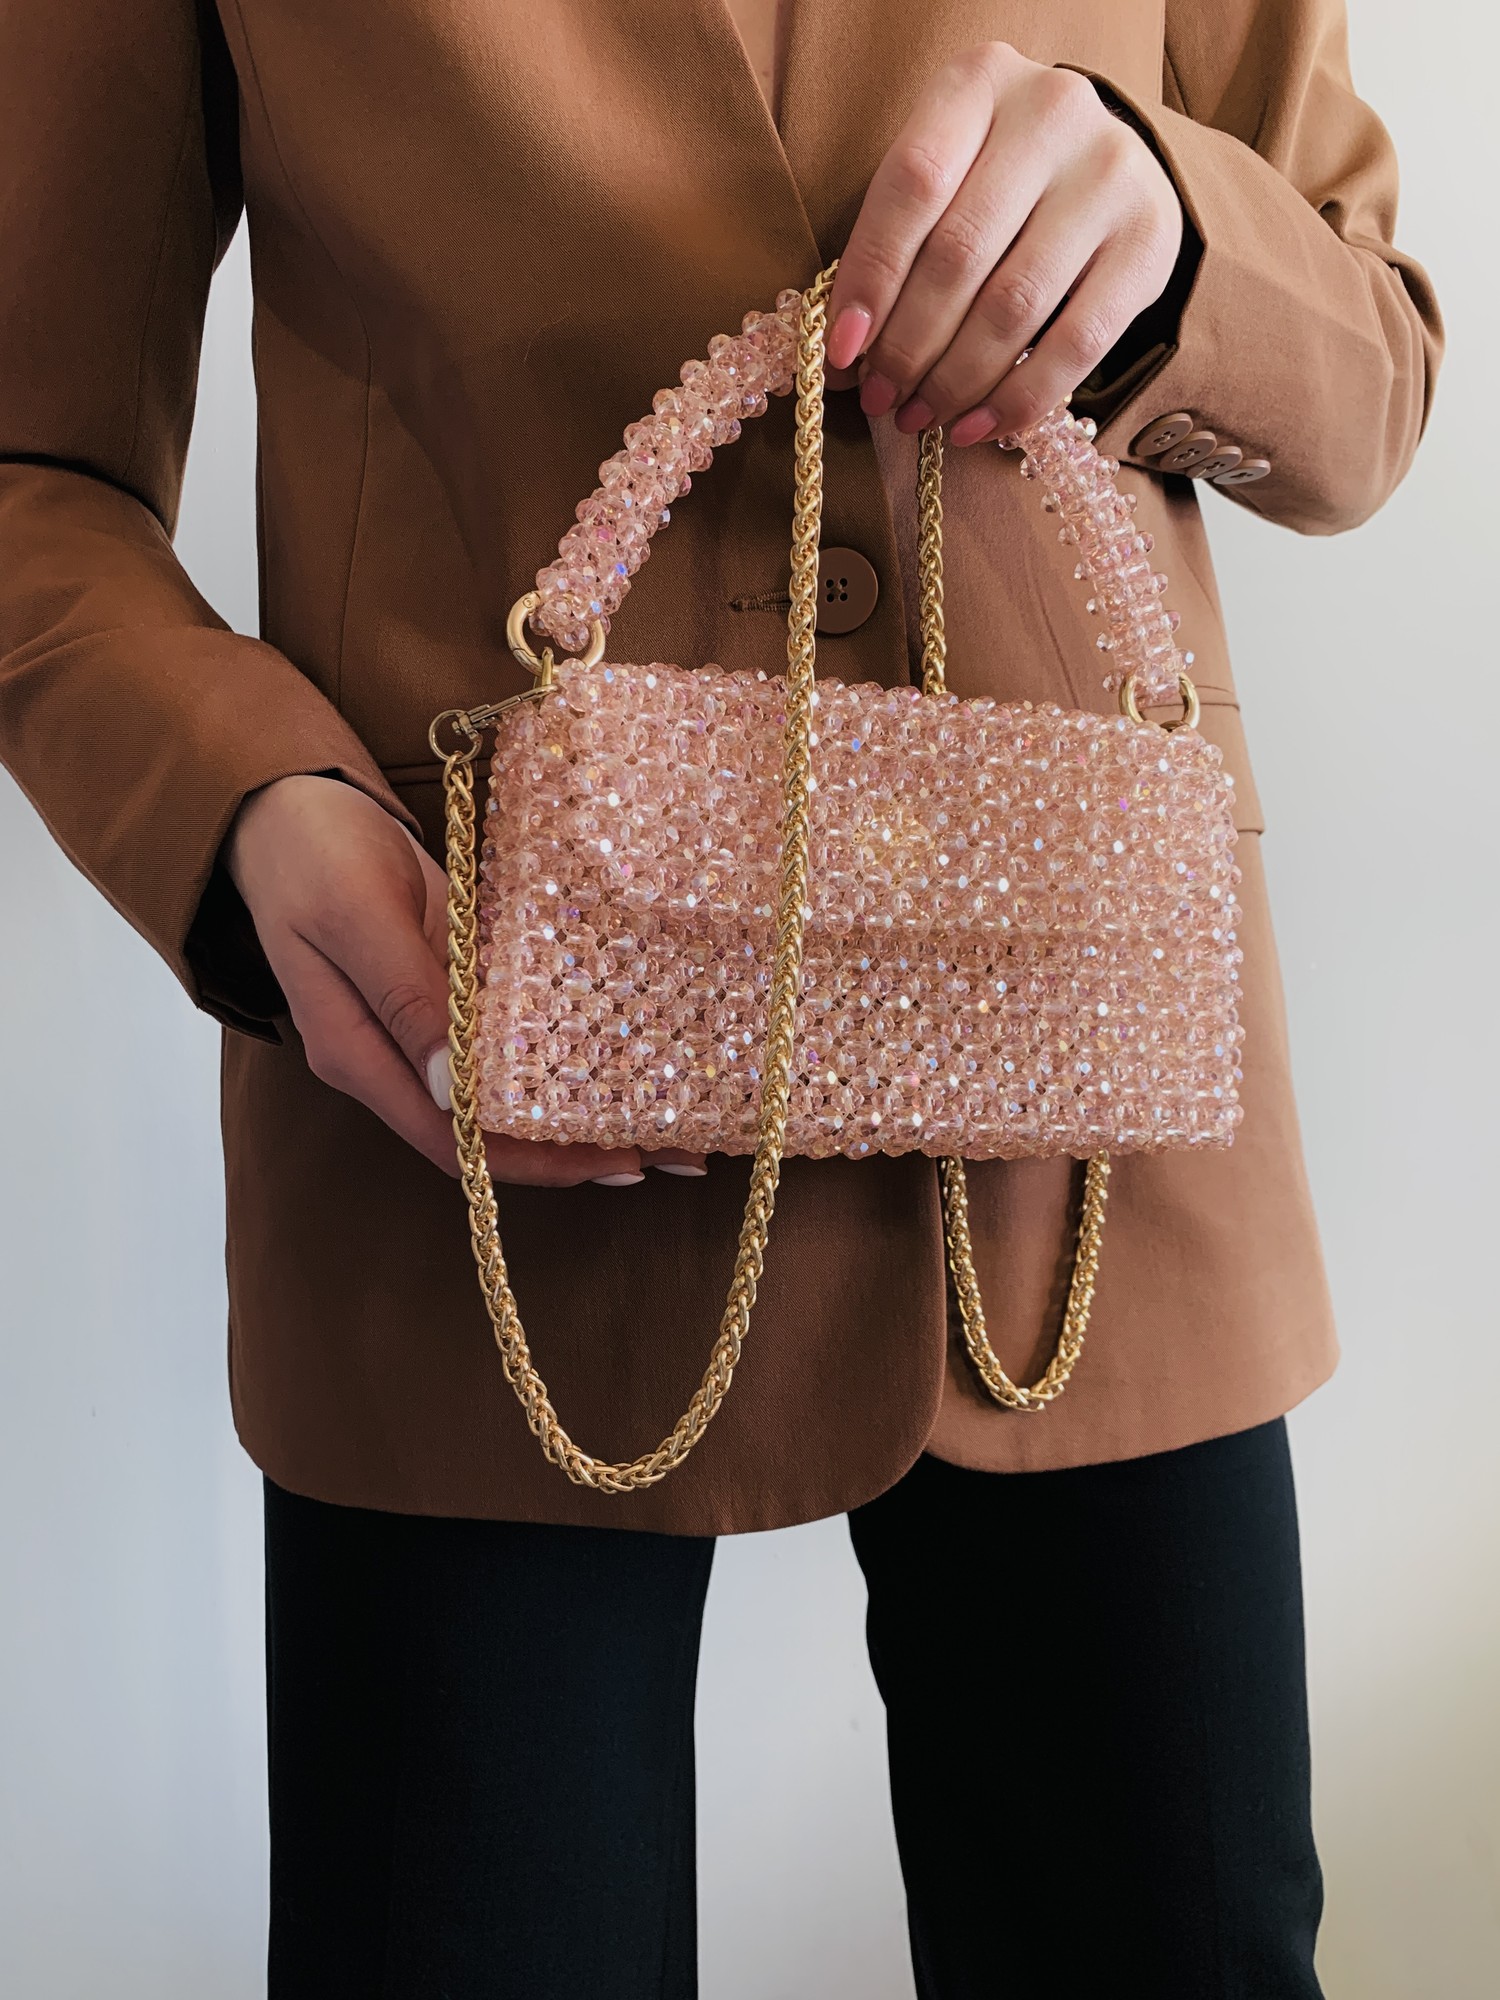 A super bright light pink evening bag